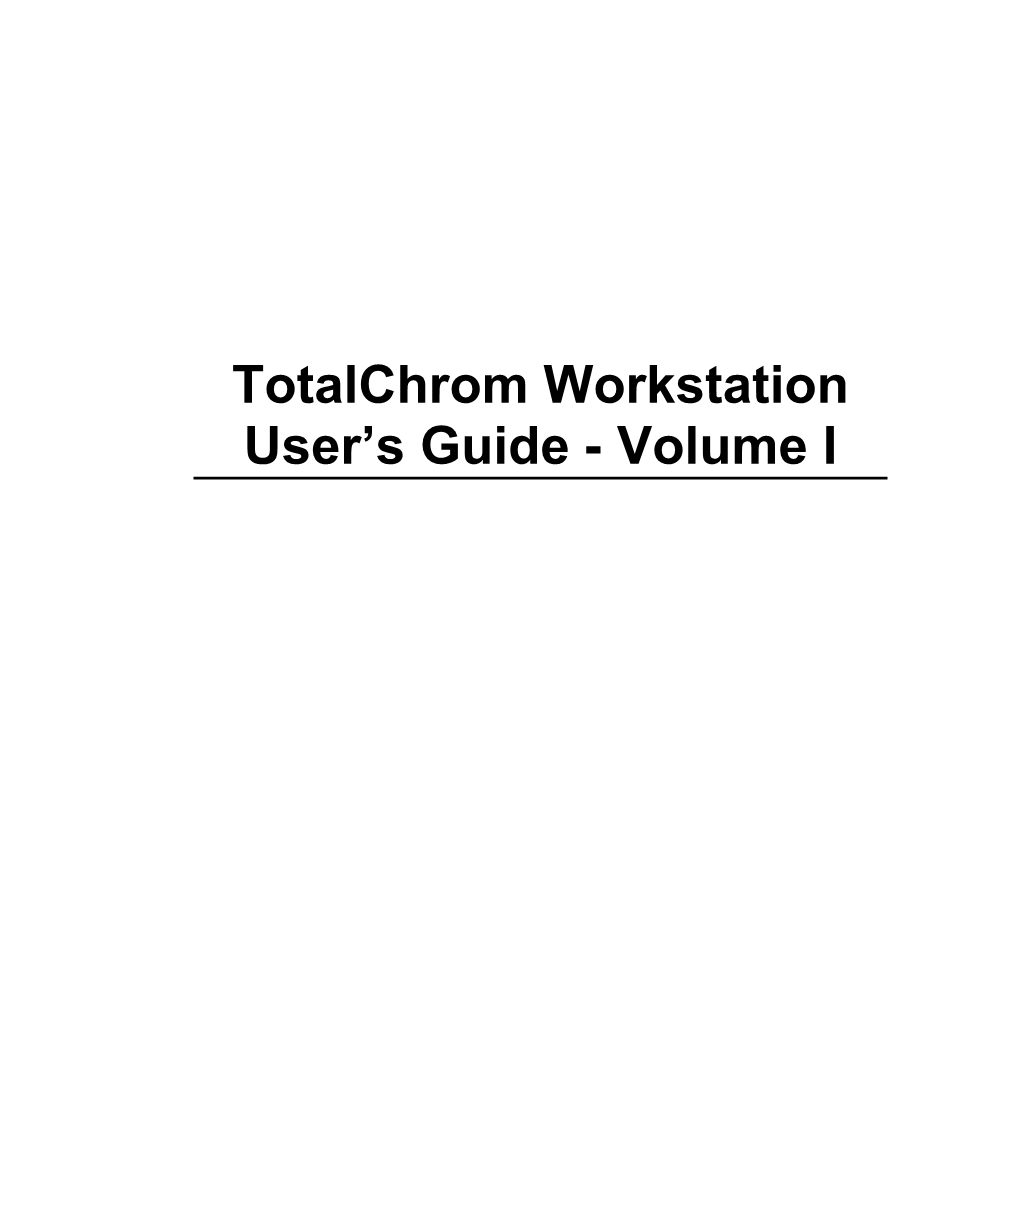 Totalchrom Workstation User's Guide